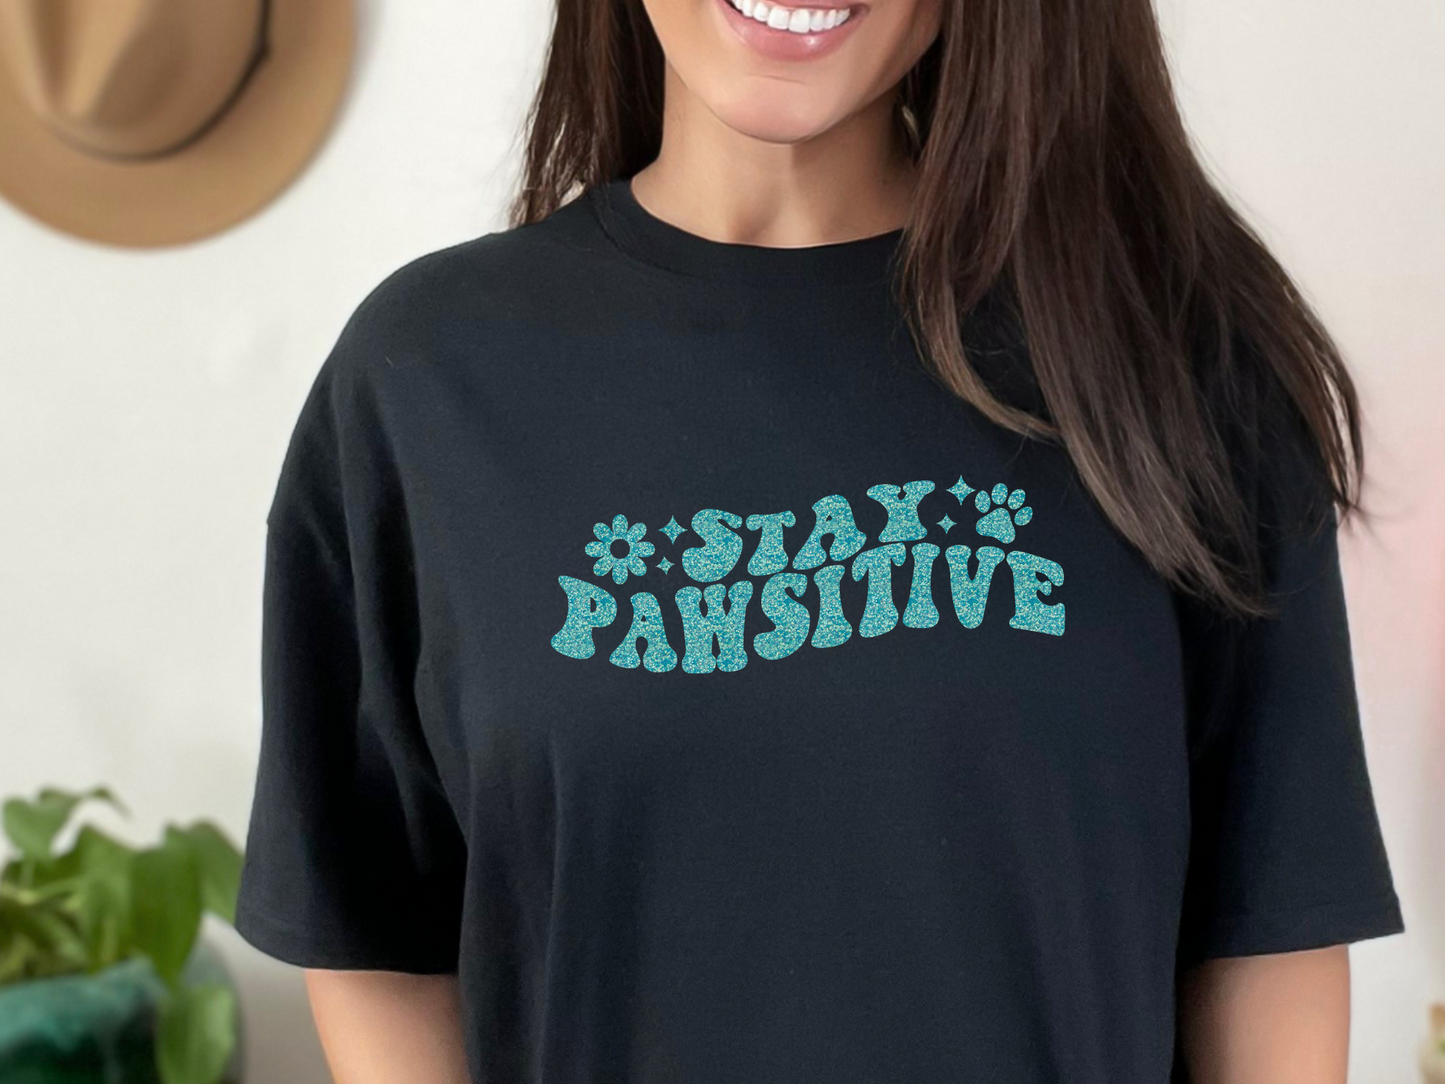 Stay Pawsitive Cotton T-shirt, Black